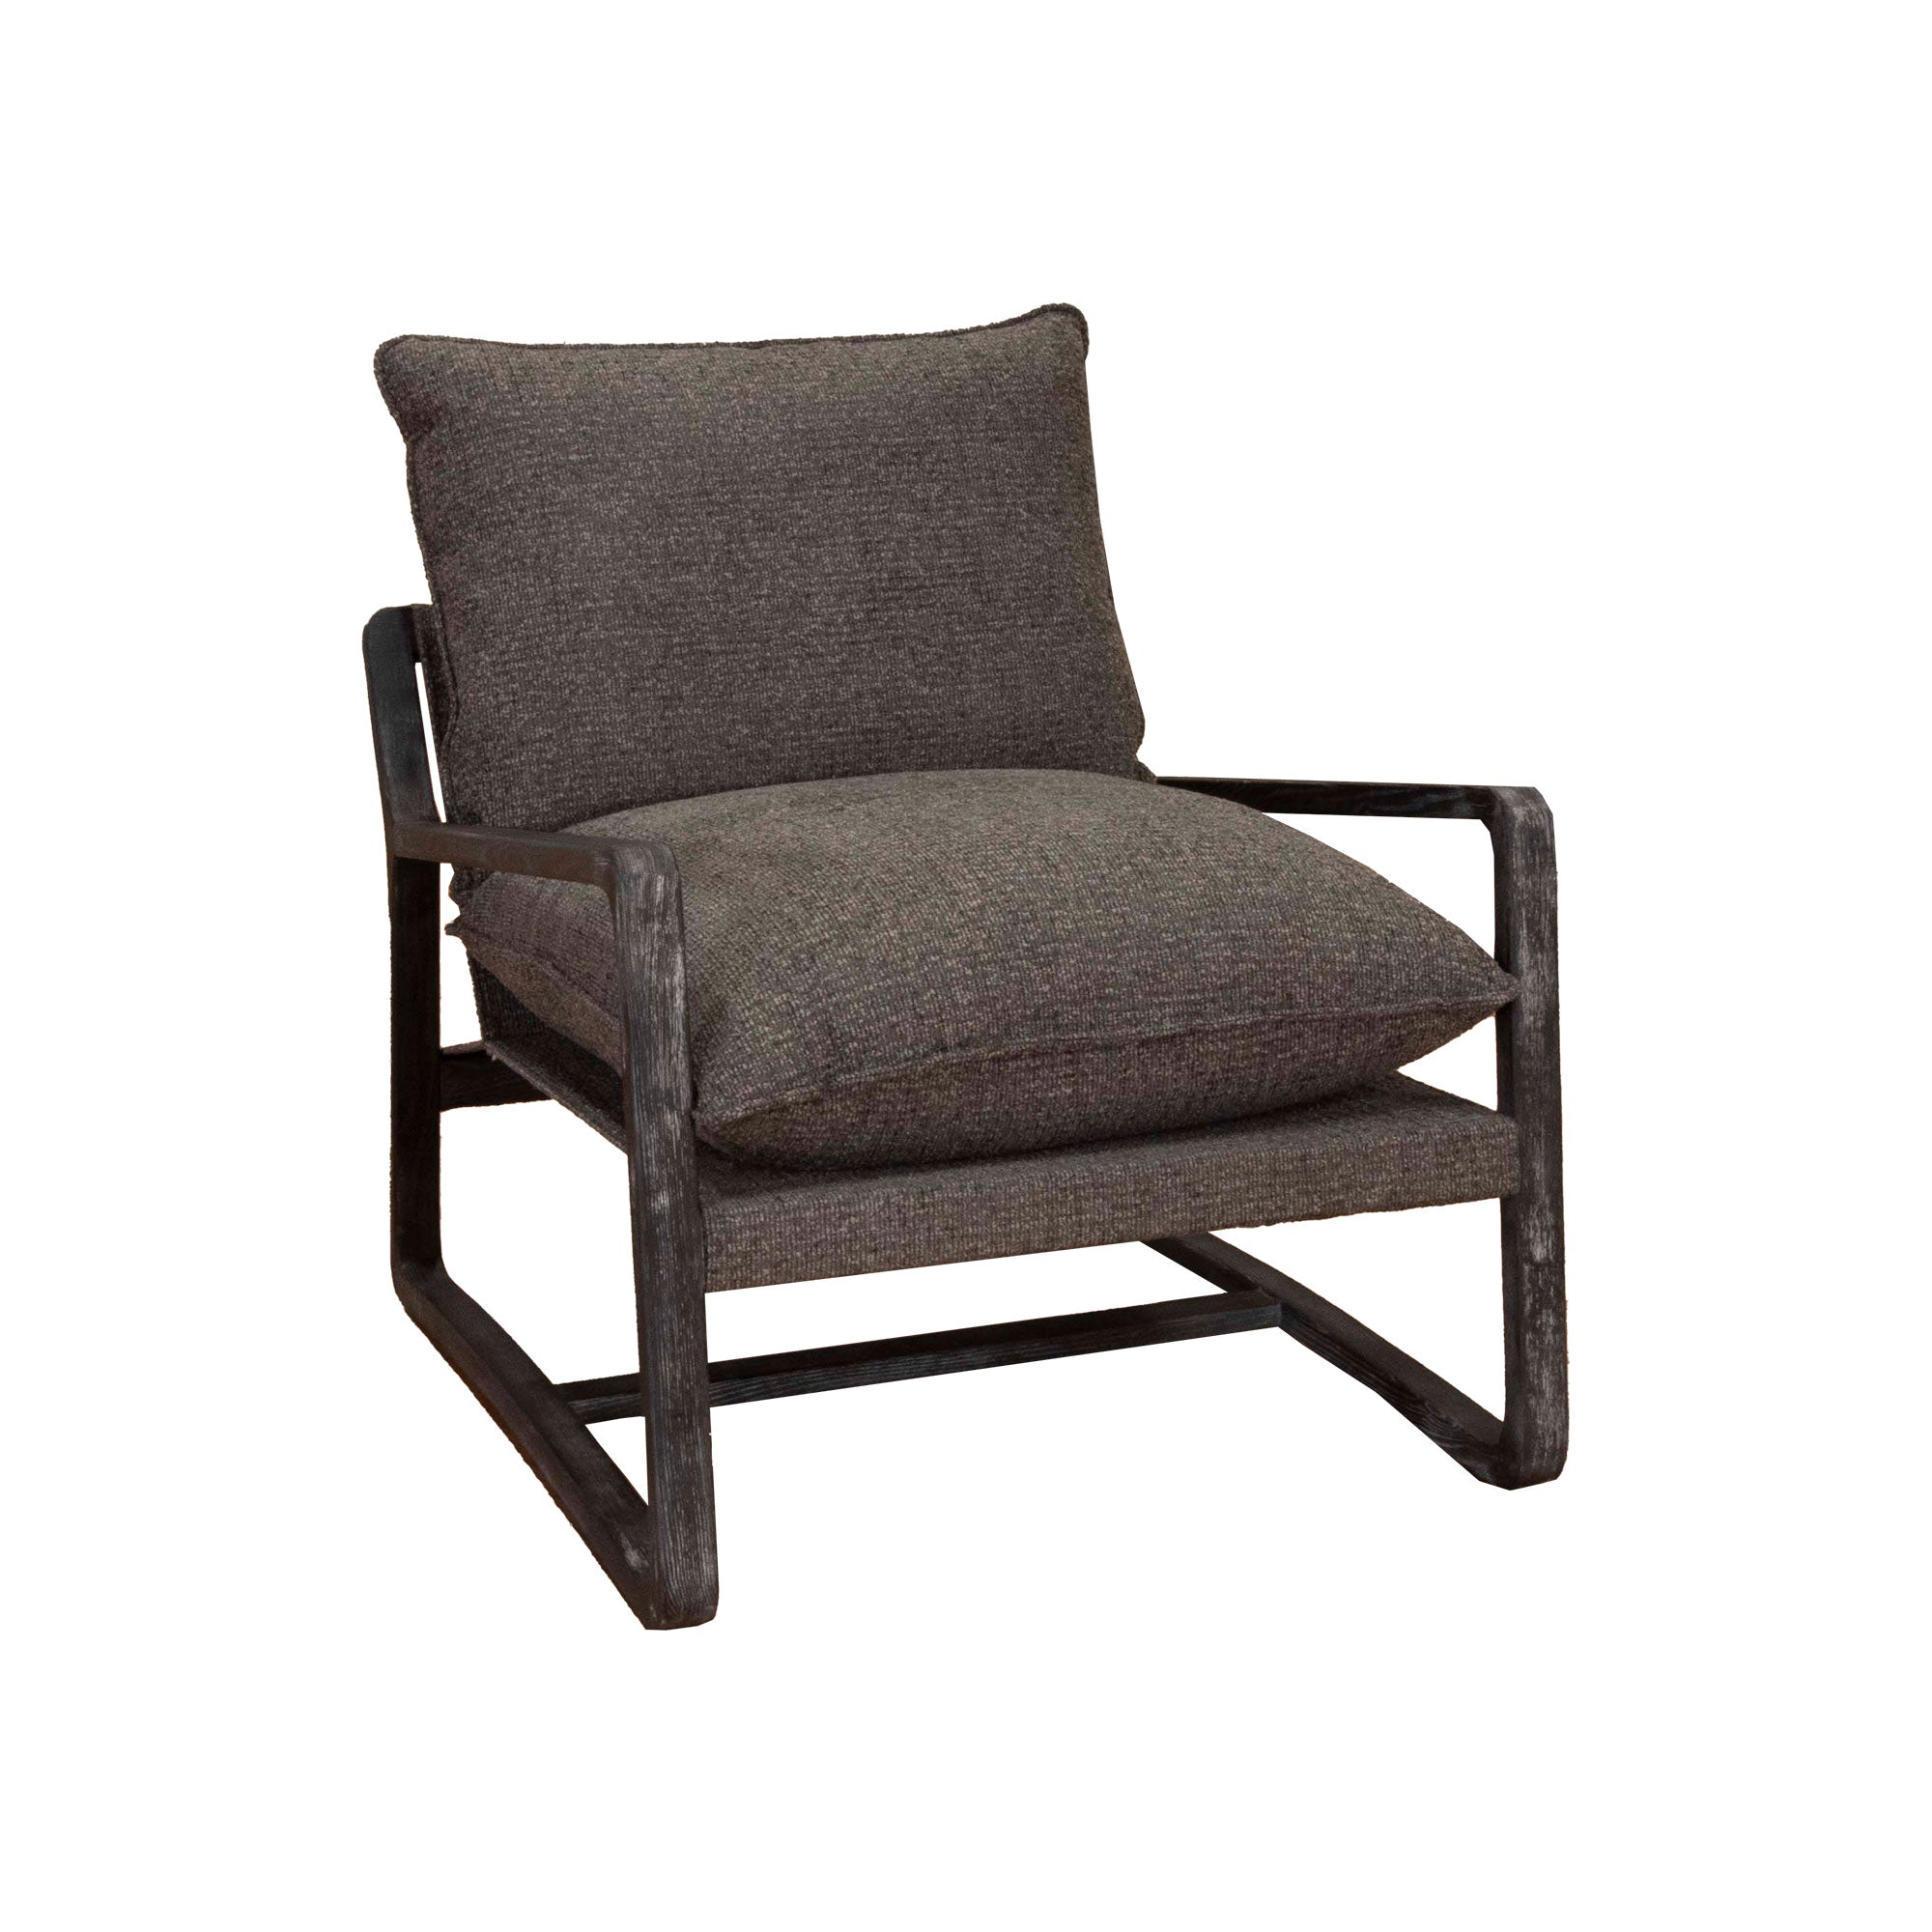 Torin Chair